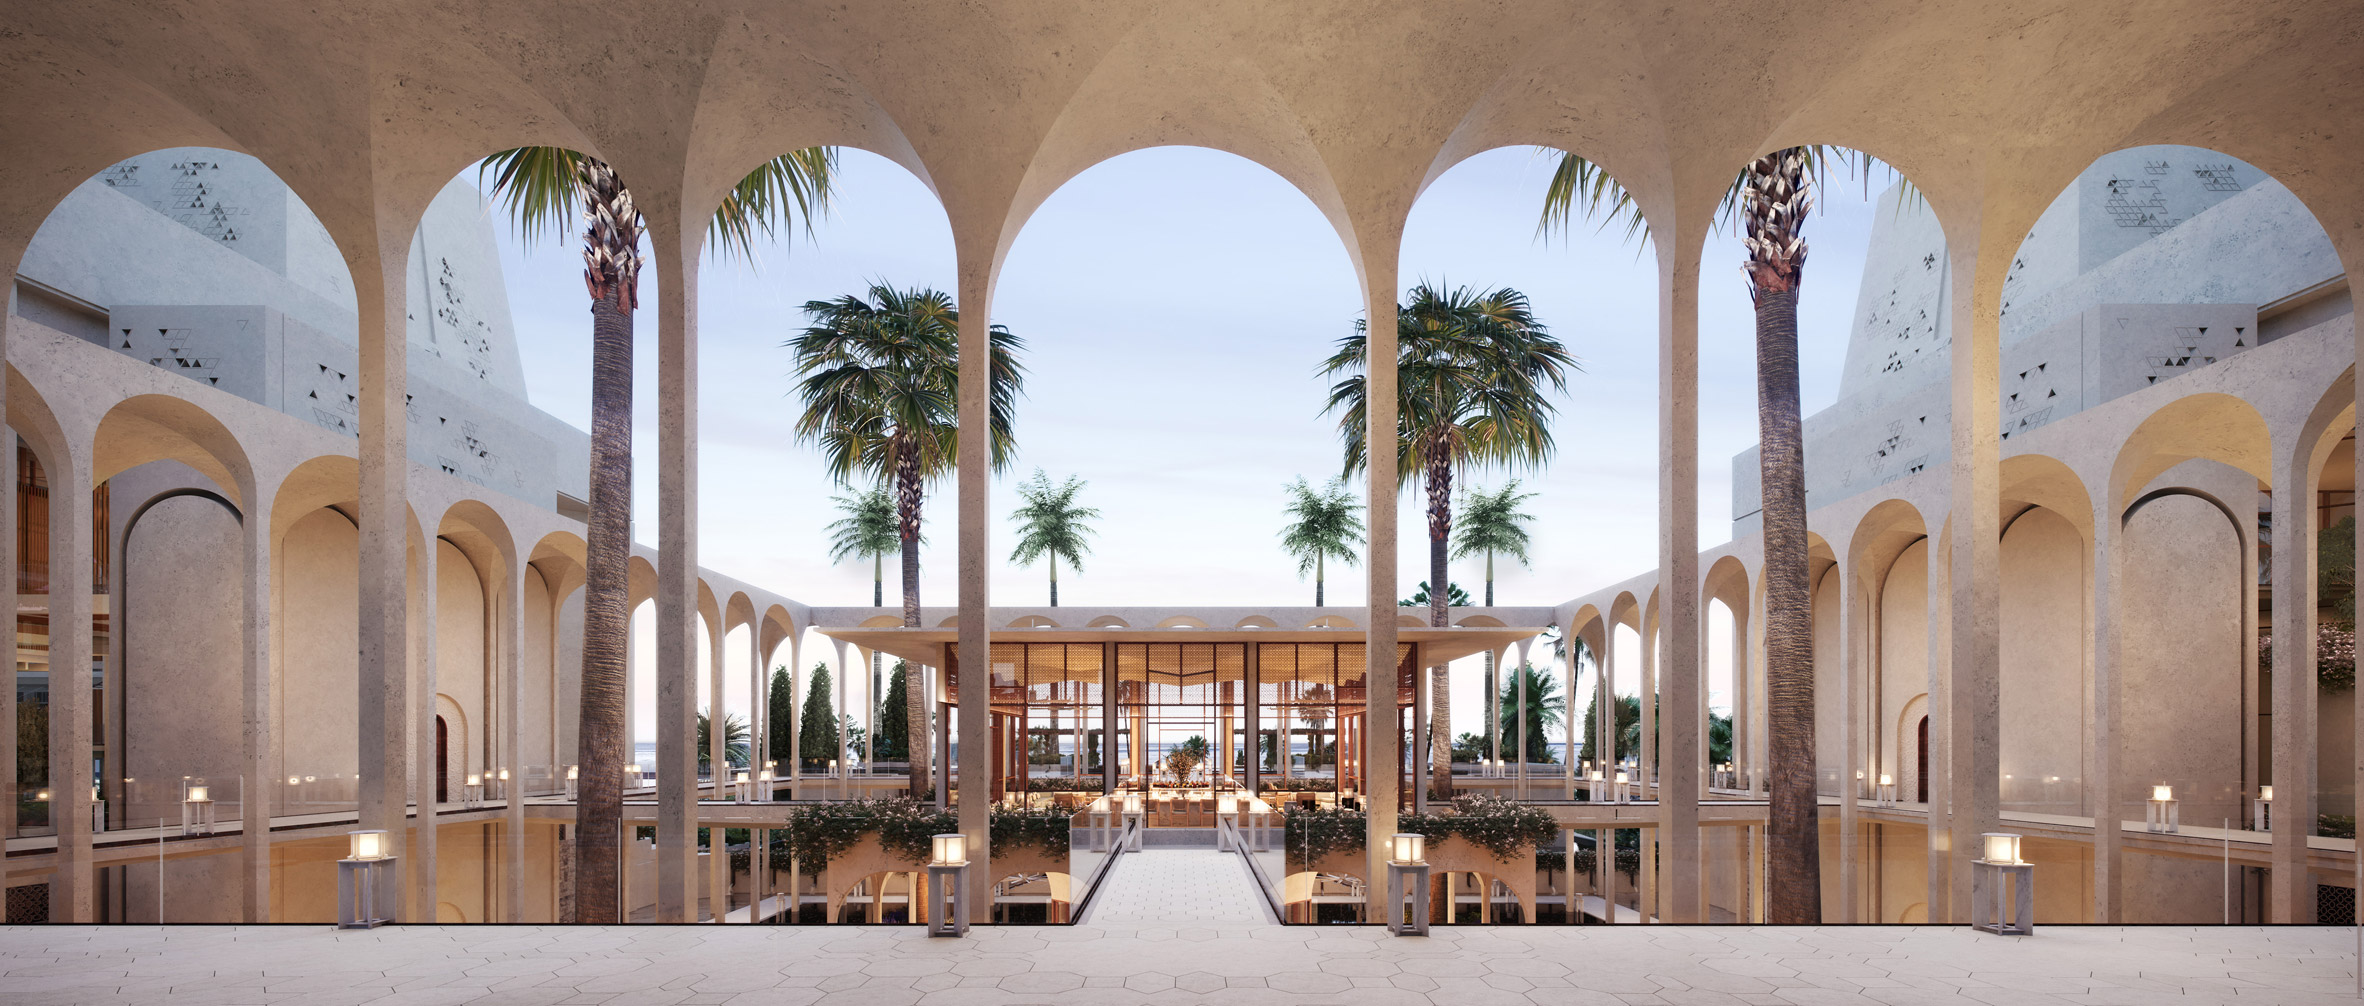 Courtyard view at Clinique La Prairie resort in Saudi Arabia